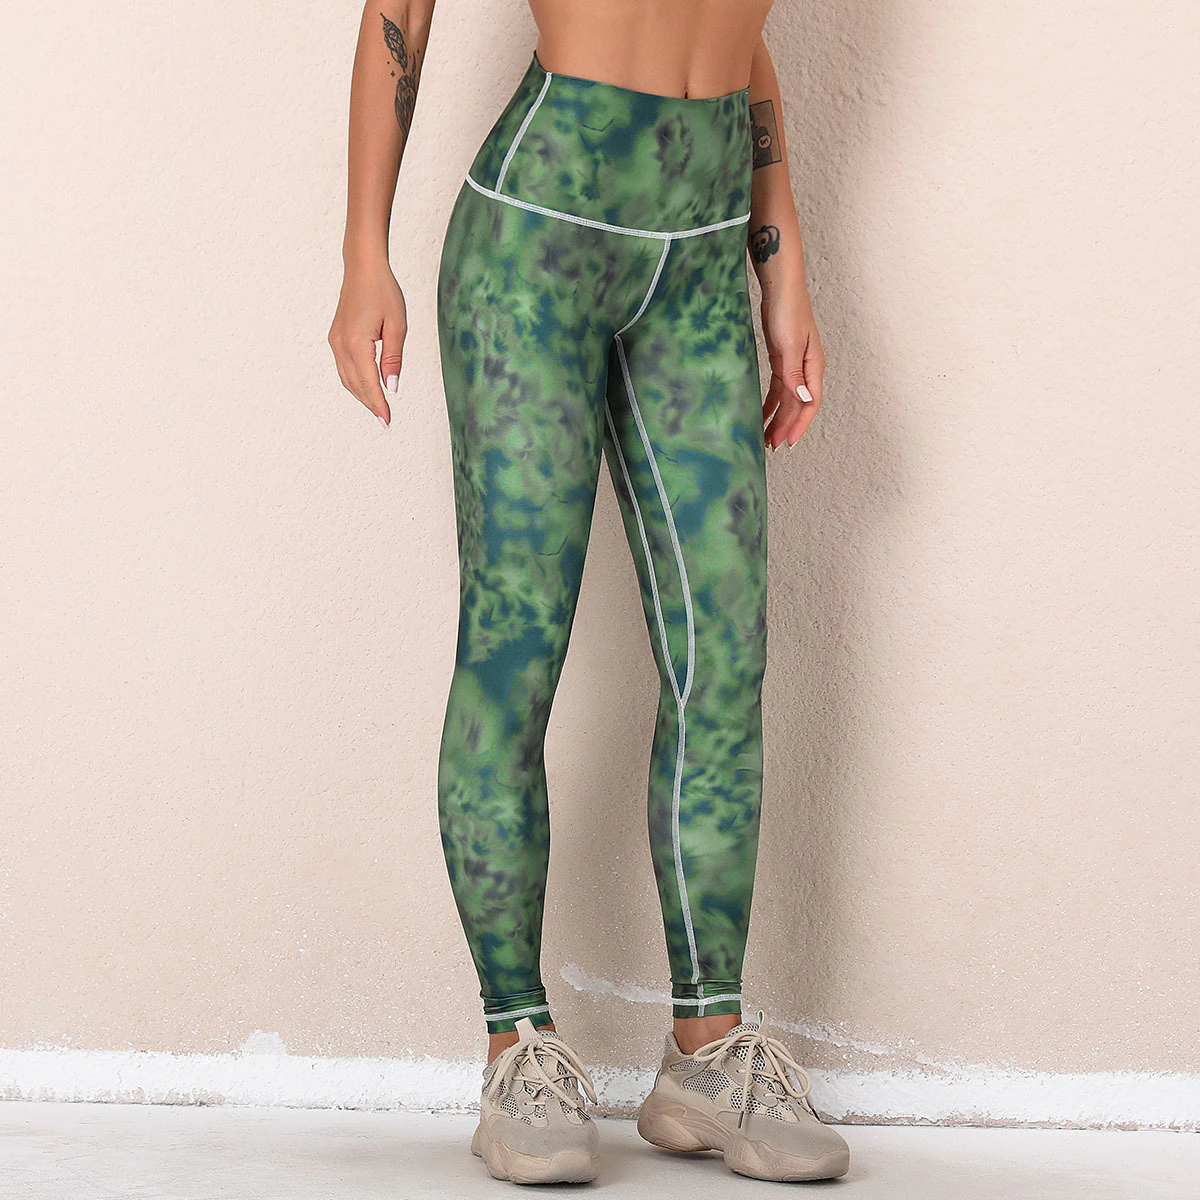 V4 / S Colorful Yoga Pants for Women - skyjackerz